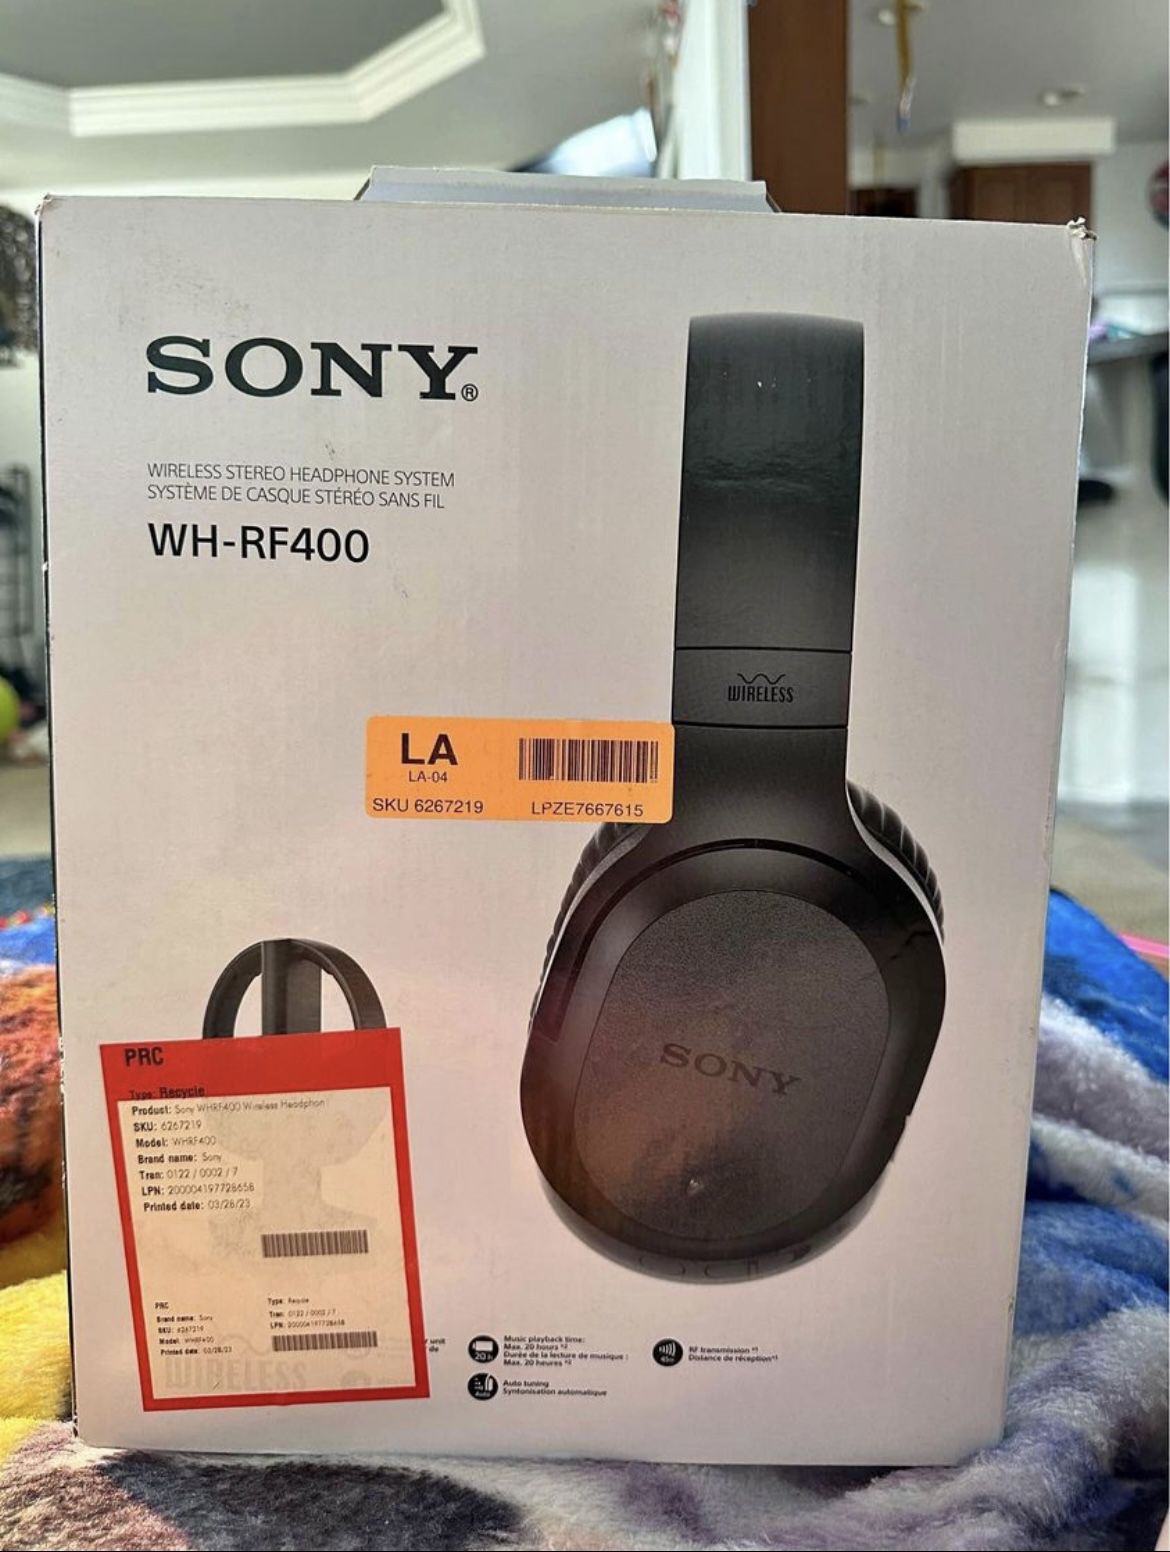 Sony Wireless Stereo Headphone System WH-RF400